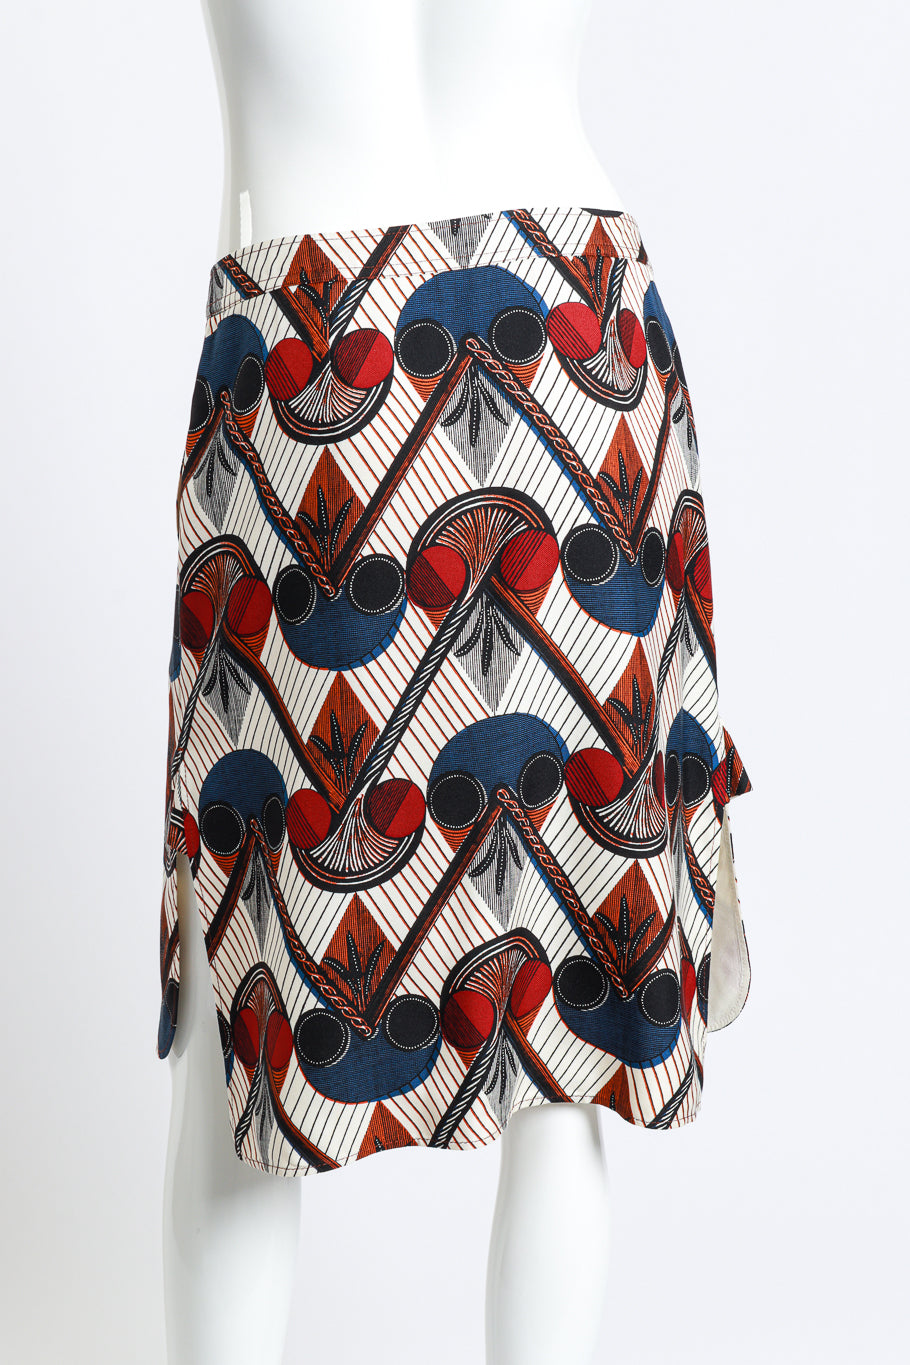 Hermes Ethnic Print Skirt back on mannequin @RECESS LA